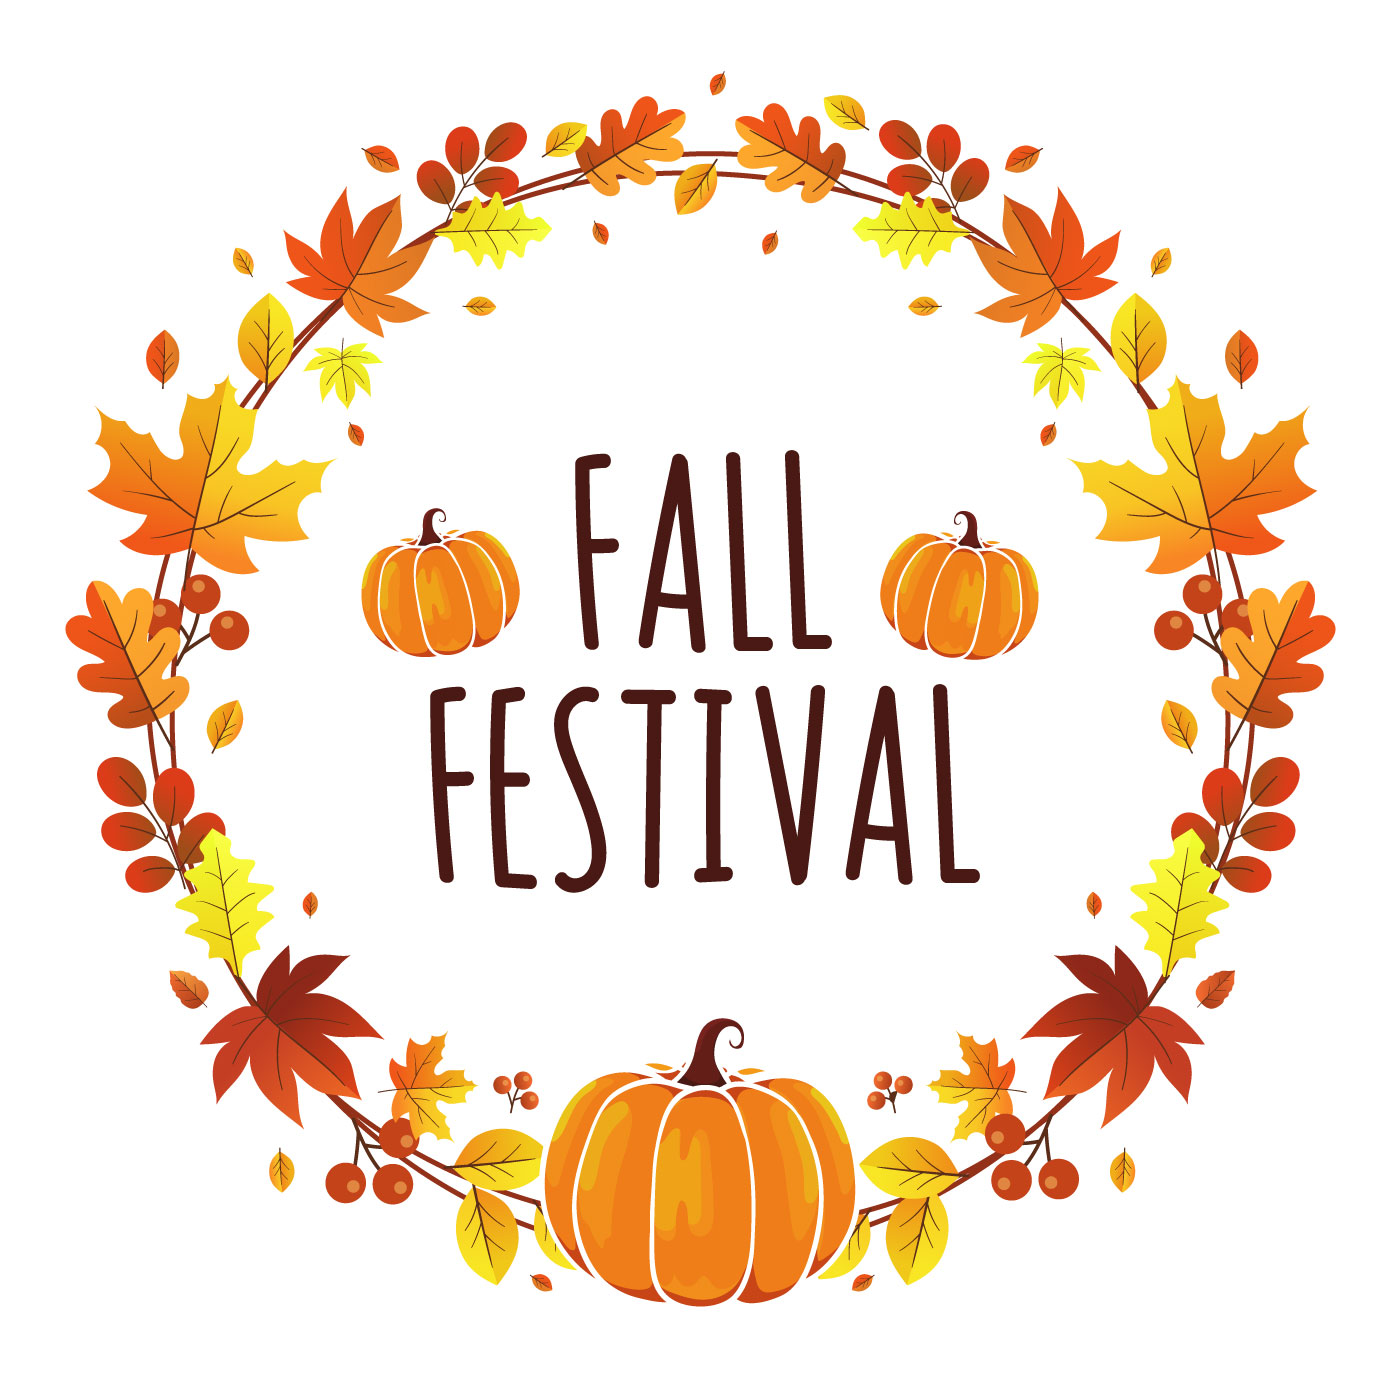 Download the Wreath Autumn Fall Festival 236089